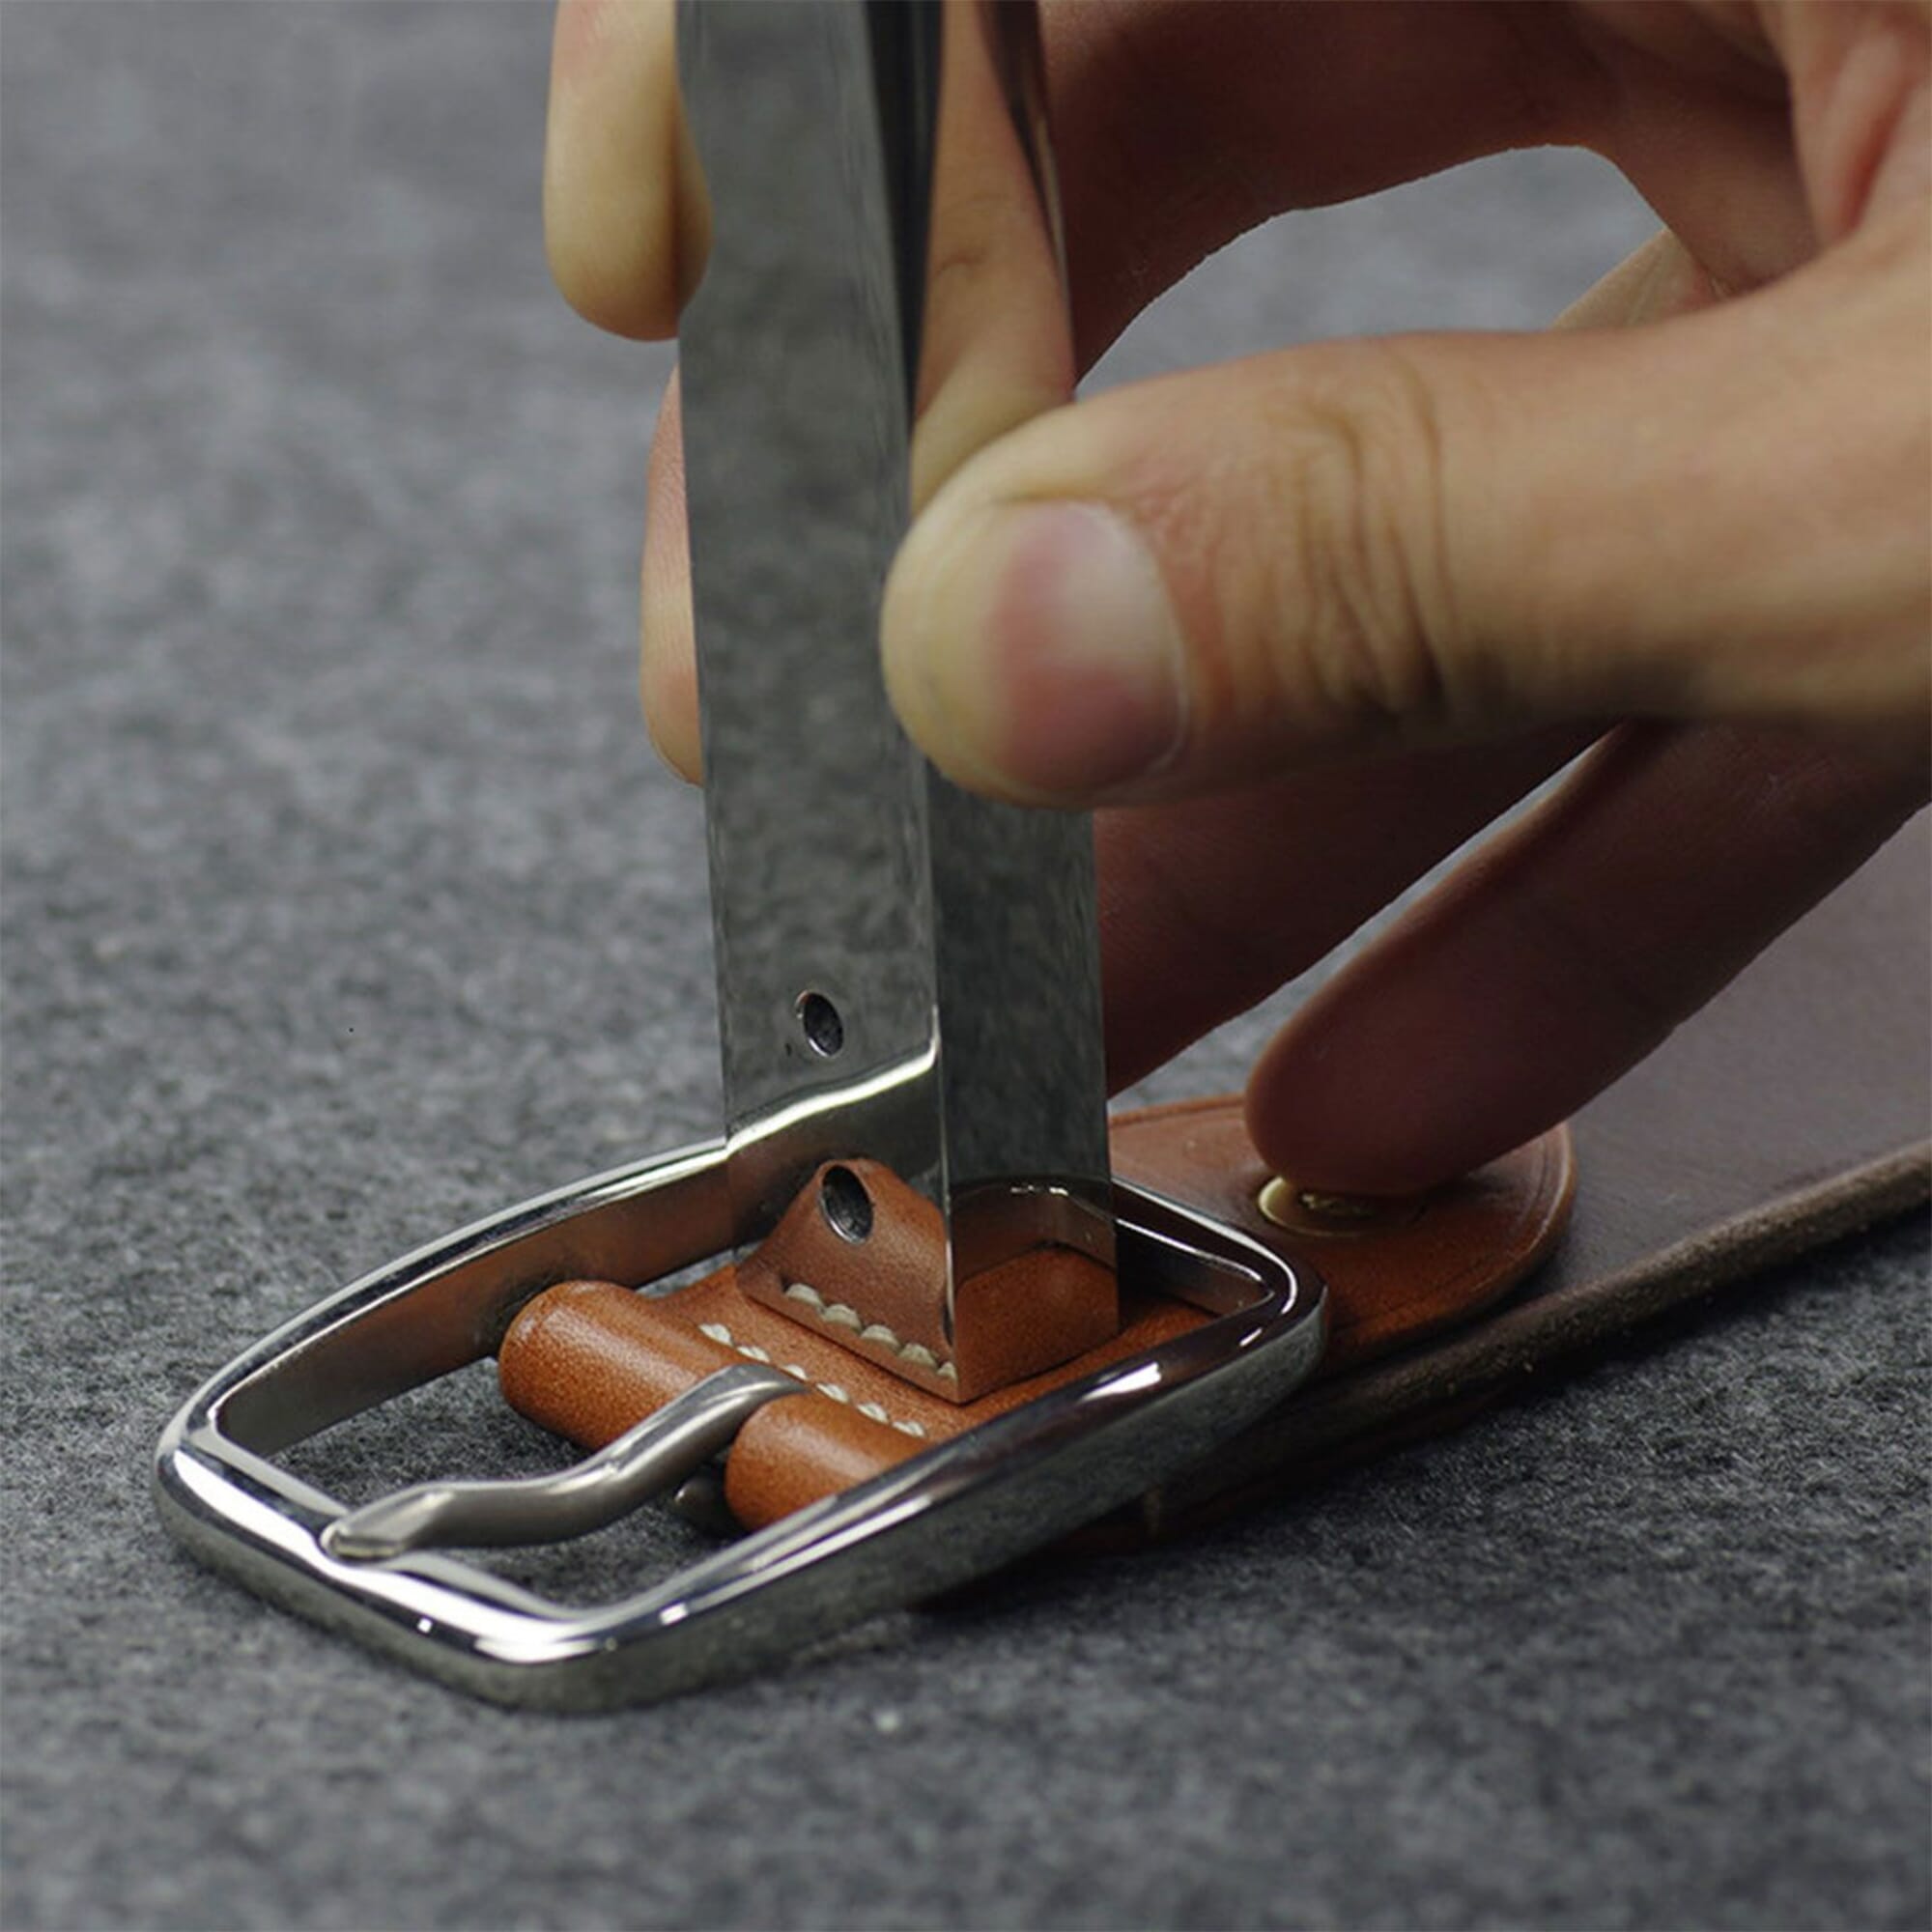 A technique for copper rivet removal. : r/Leathercraft